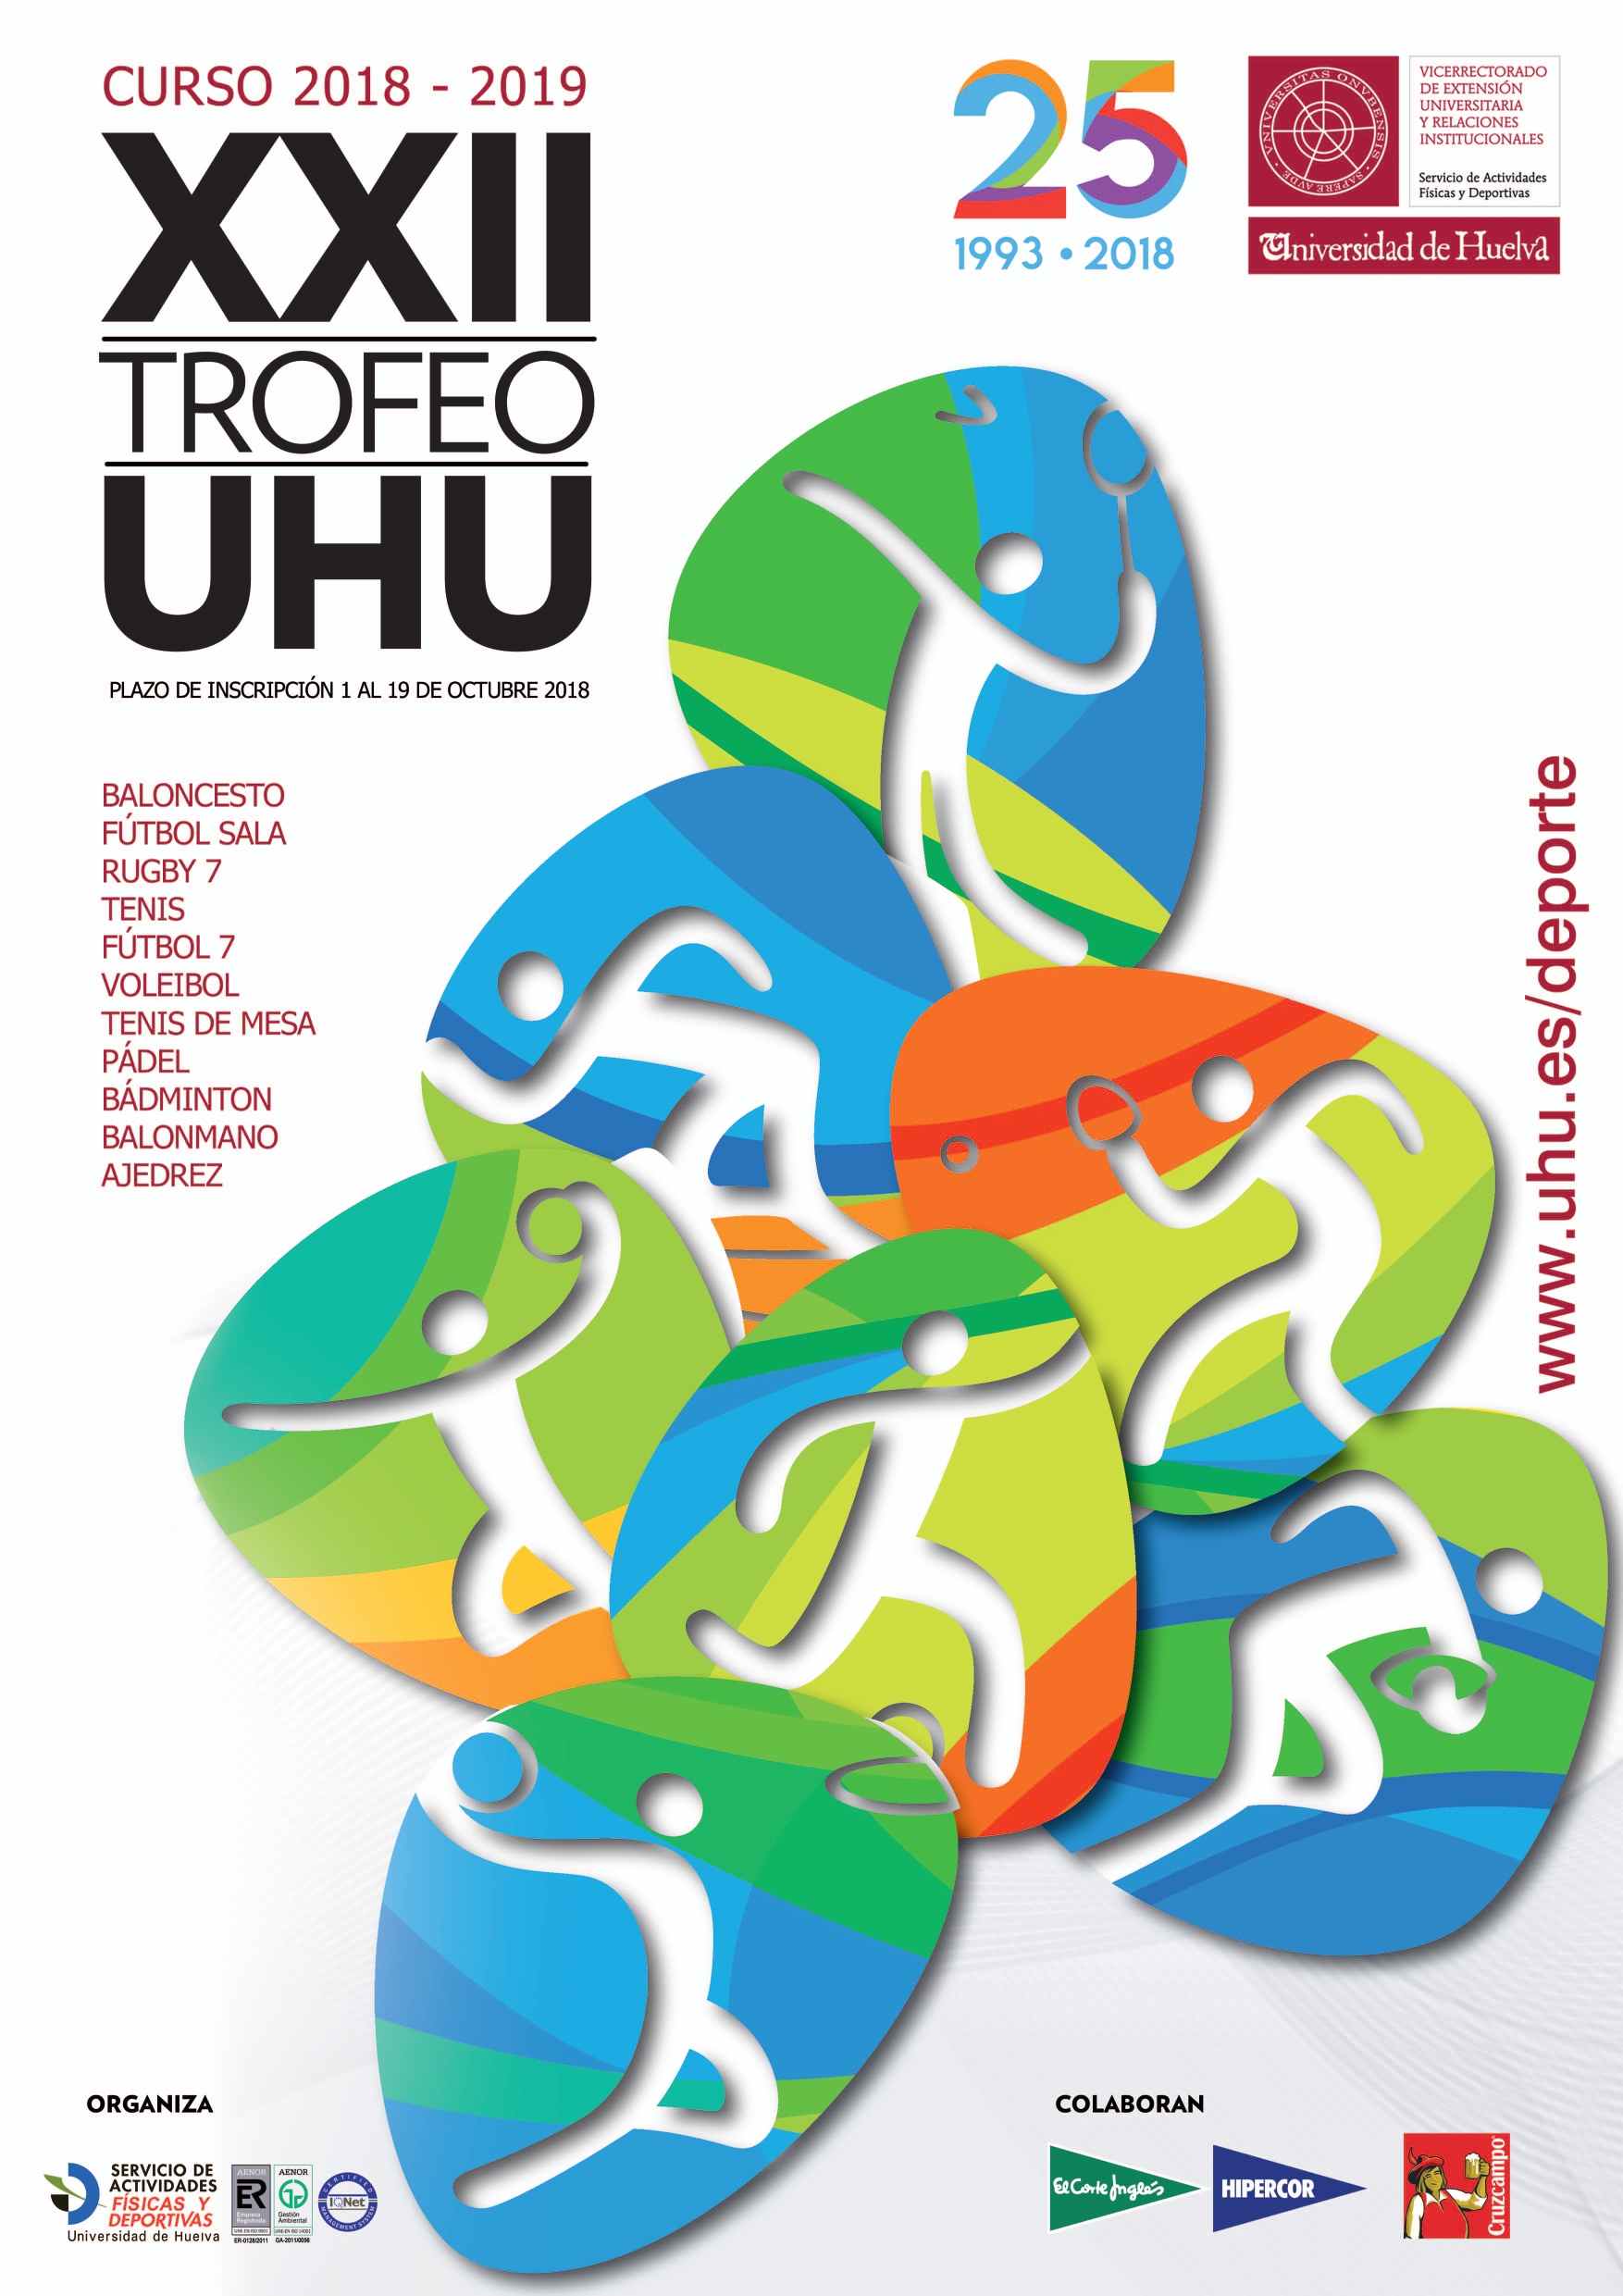 XXII Trofeo UHU